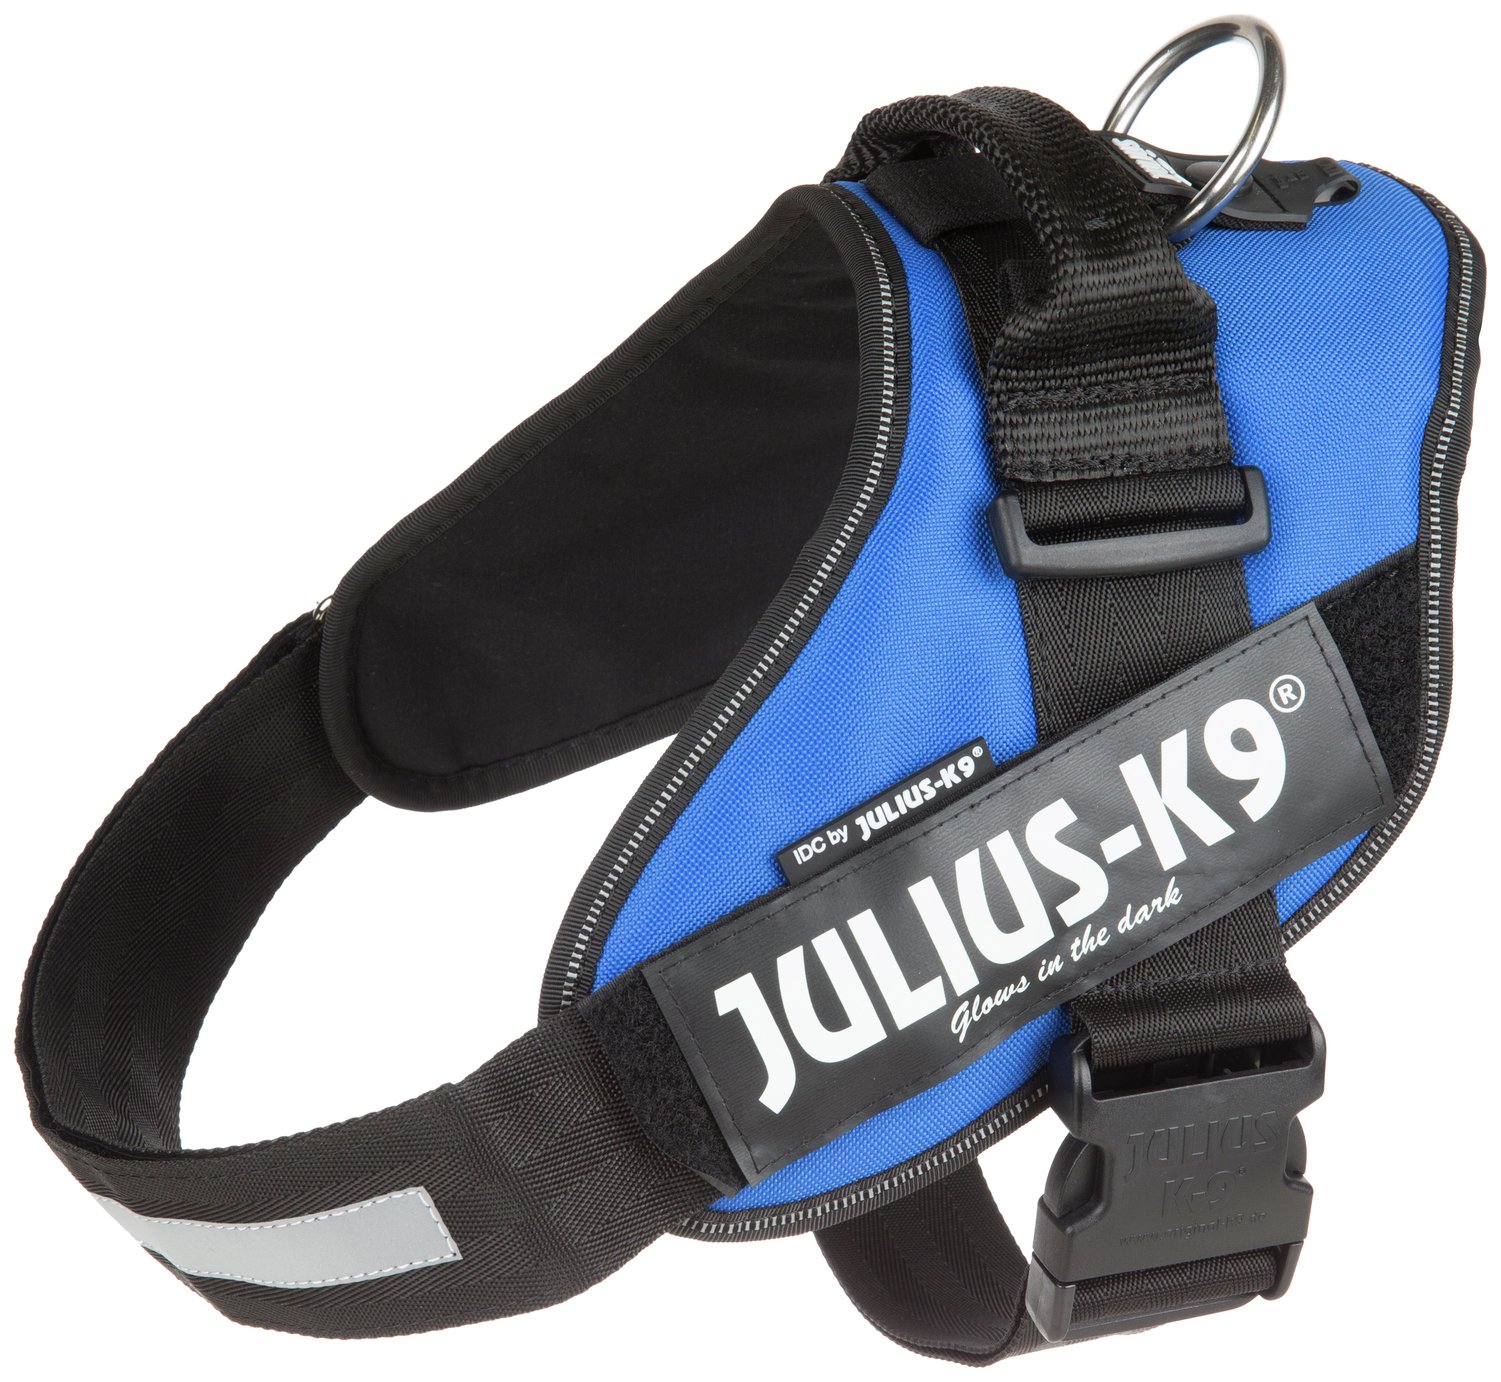 Julius-K9 IDC Power Harness - Blue 2